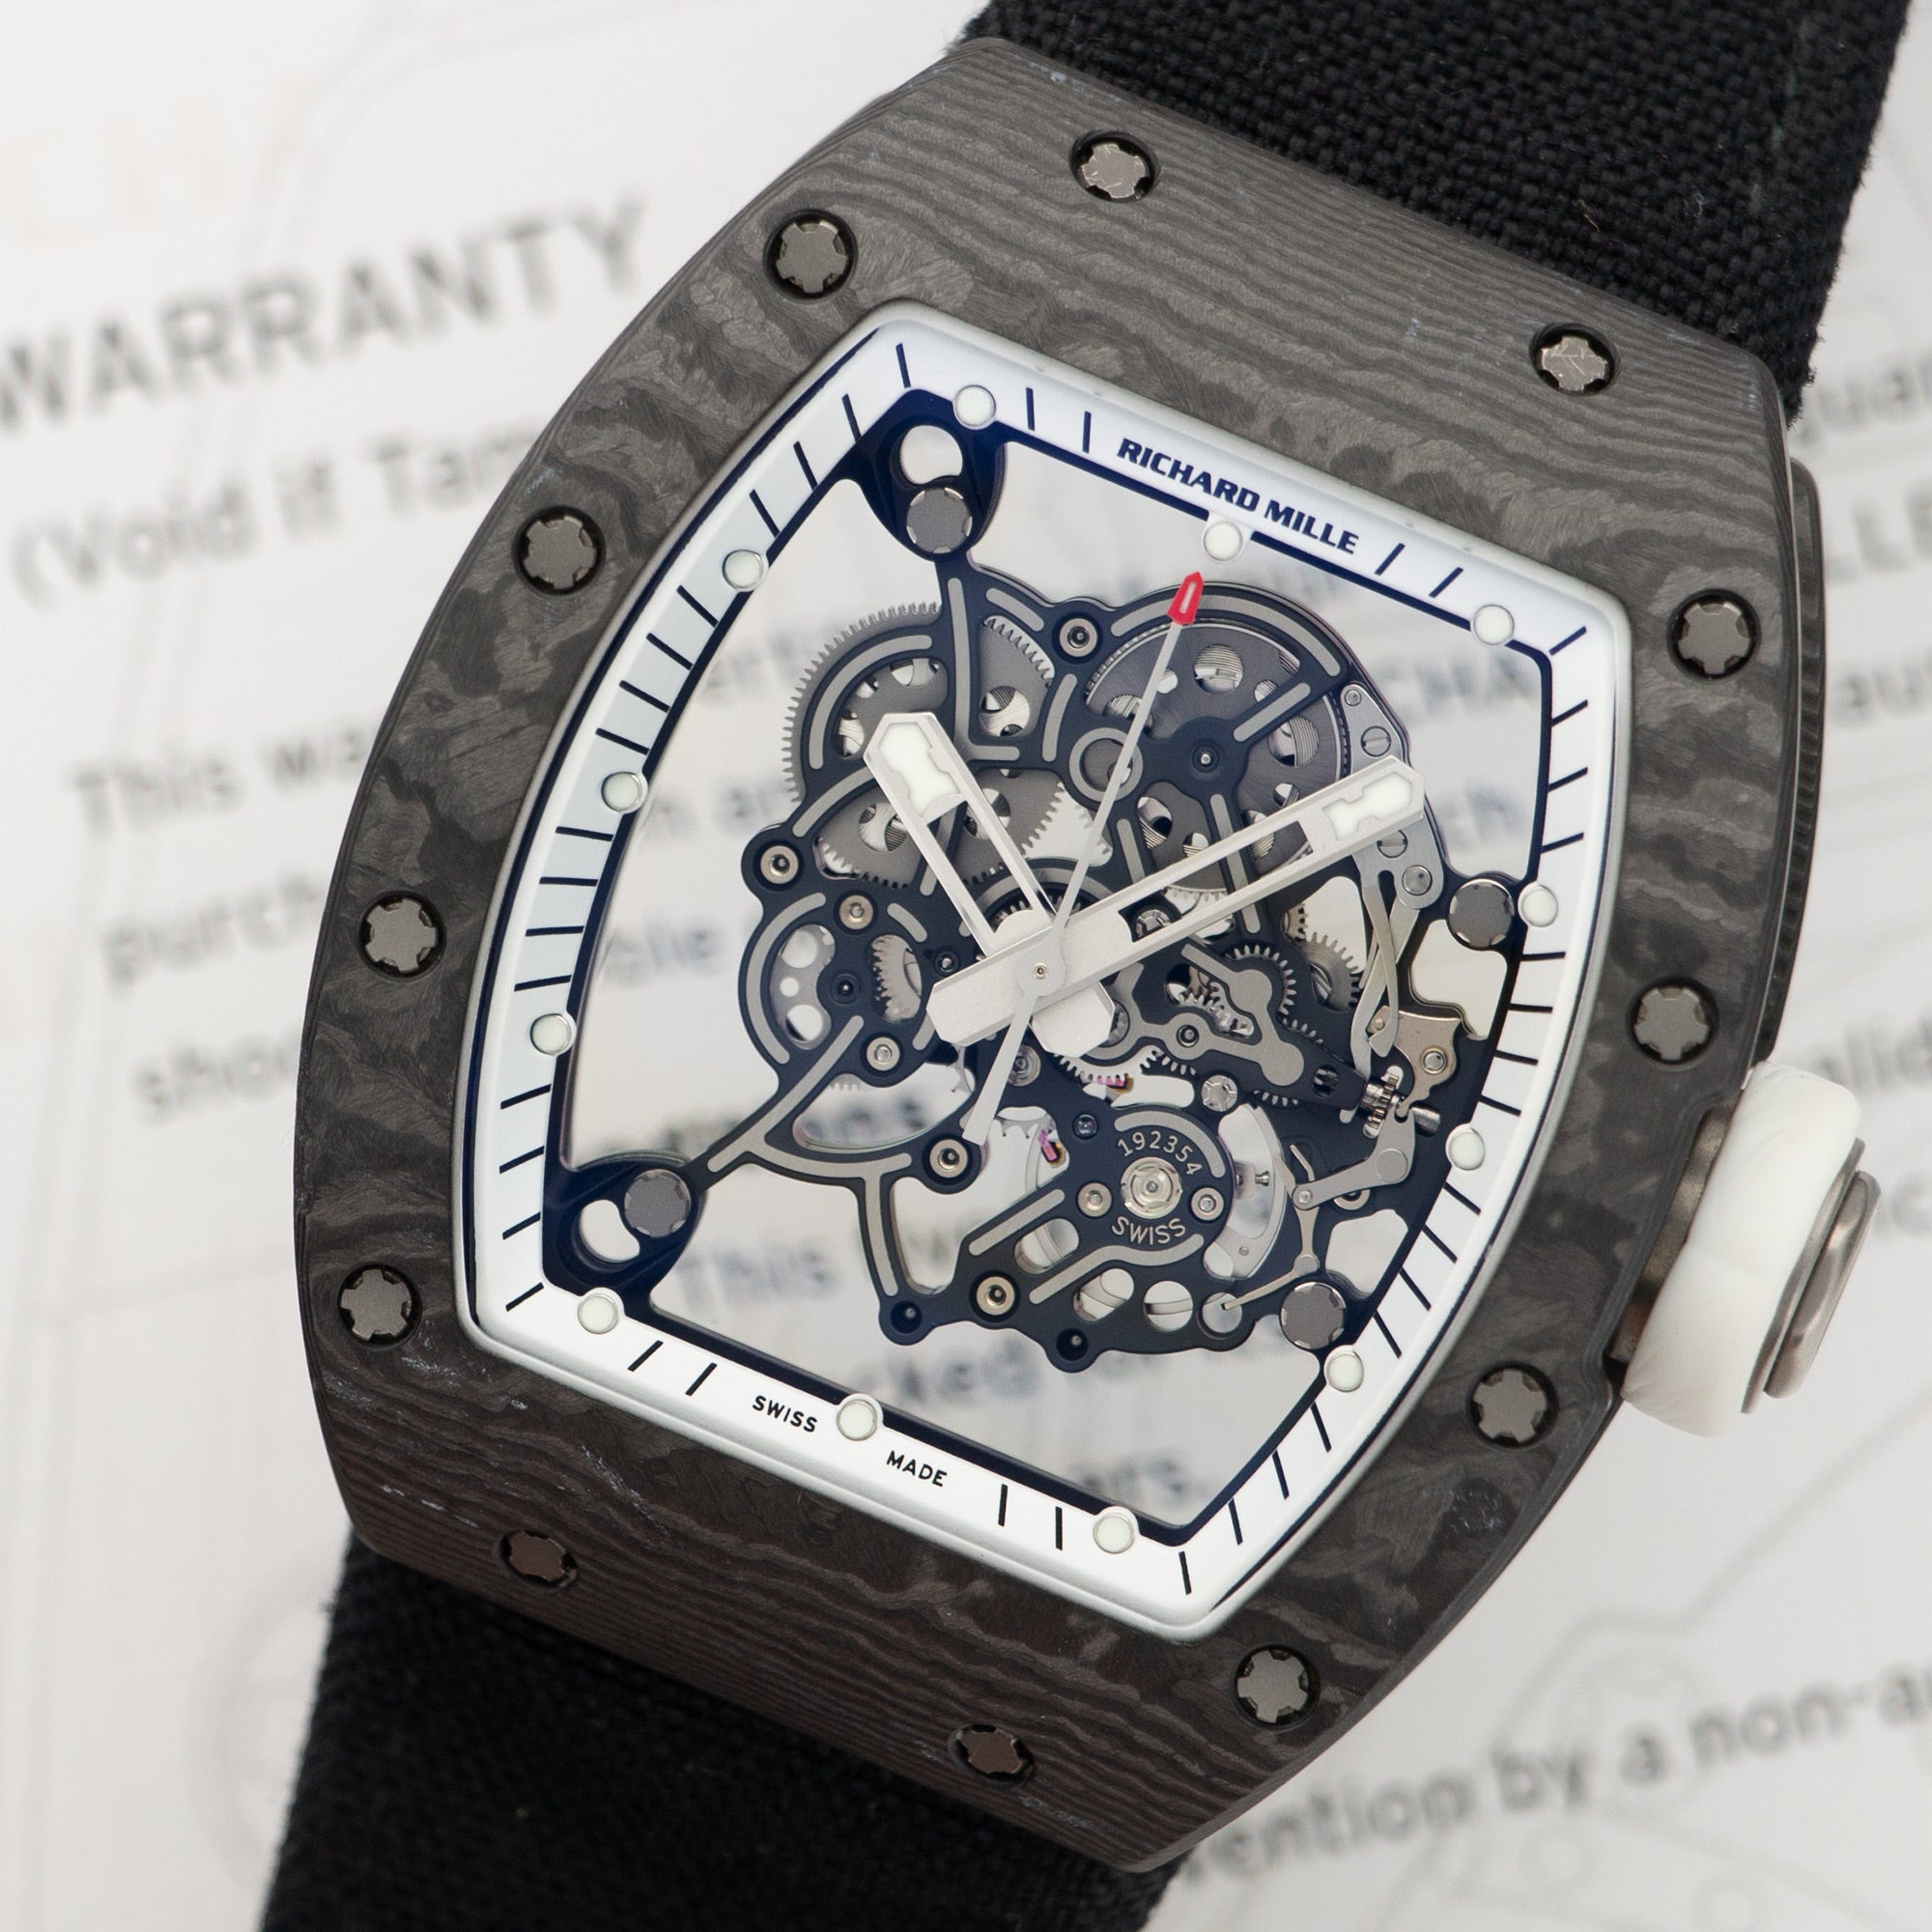 Richard Mille - Richard Mille Carbon Fiber Skeleton White Legend Watch Ref. RM055 RM55 - The Keystone Watches